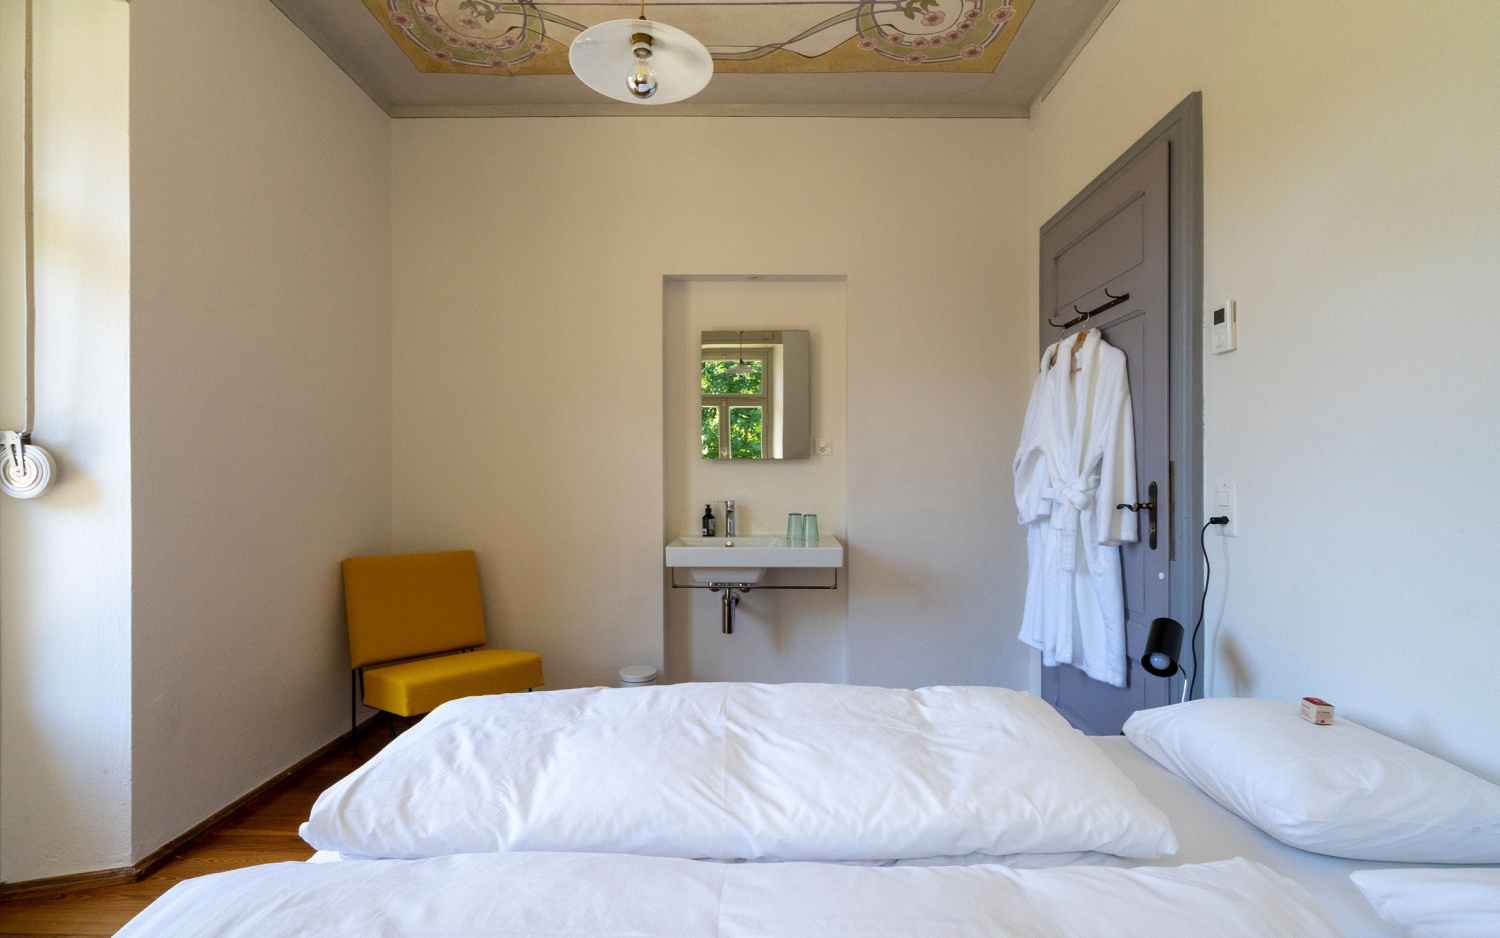 Zimmer villa pineta fusio swiss historic hotels 04